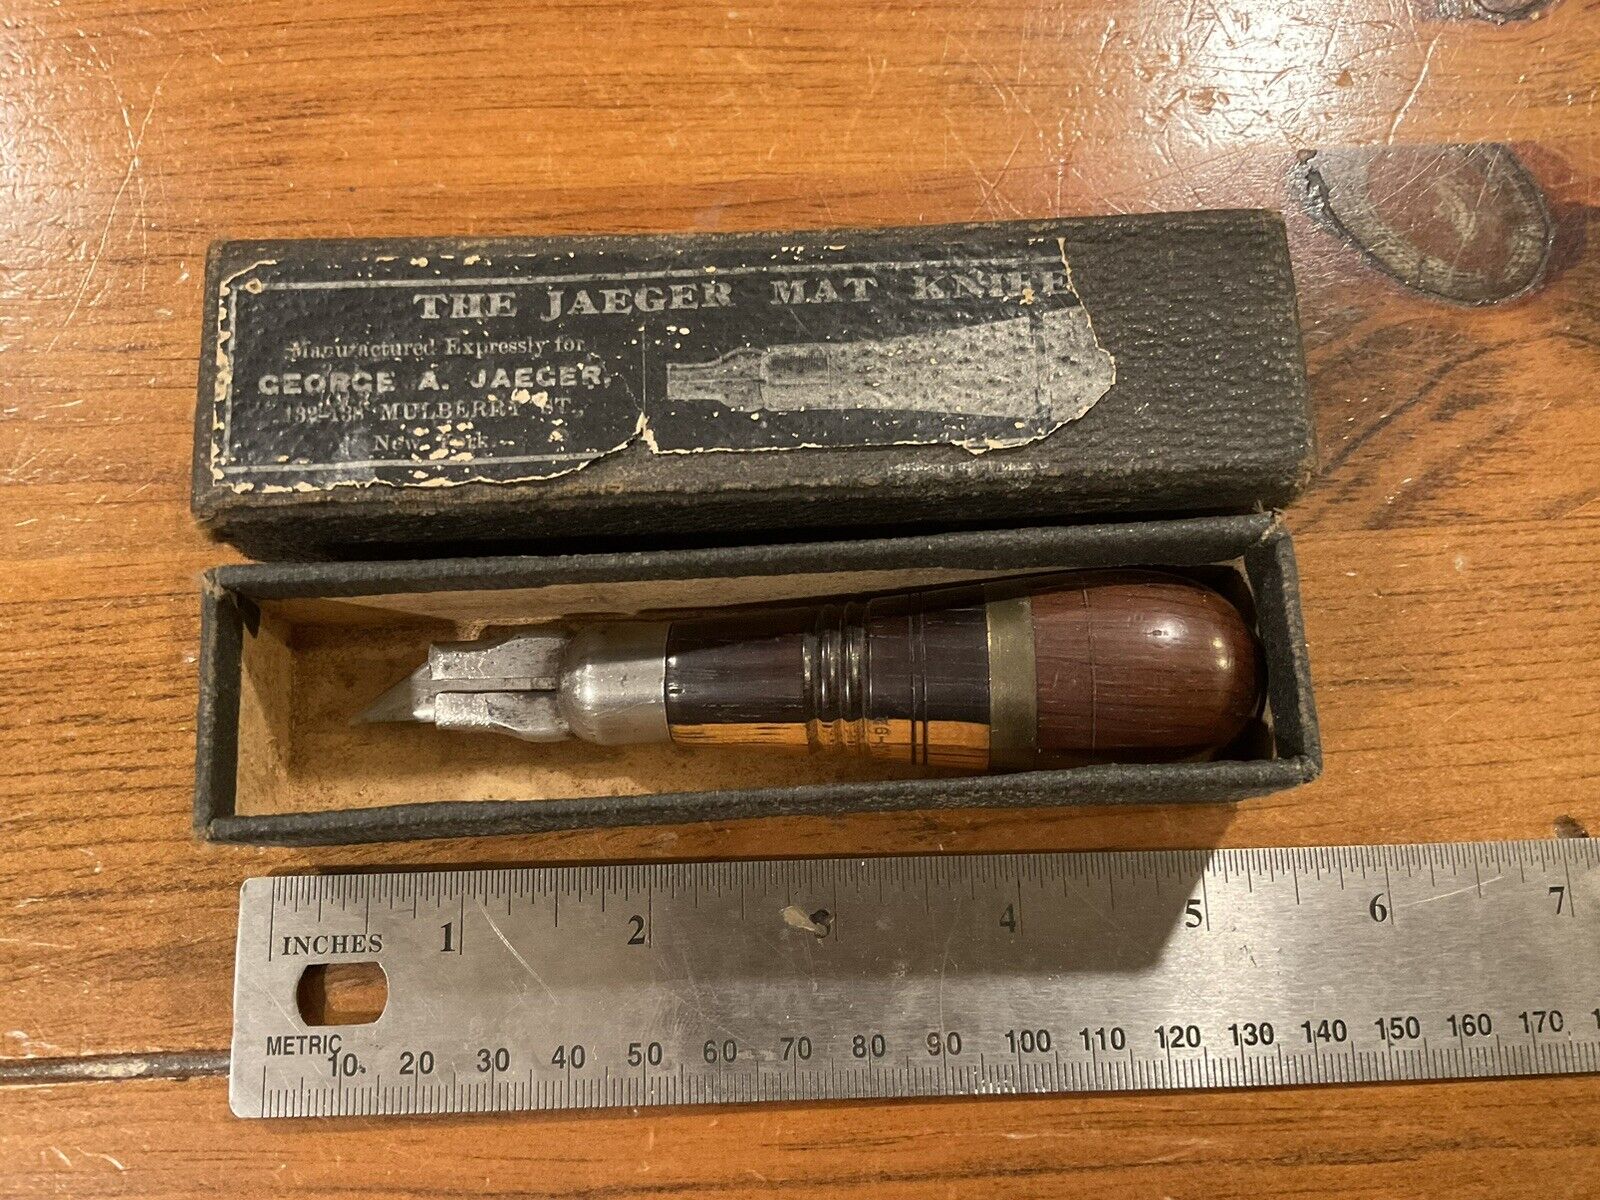 ORIGINAL ANTIQUE 1892 TOOL IN BOX - GEORGE JAEGER MAT KNIFE - NYC